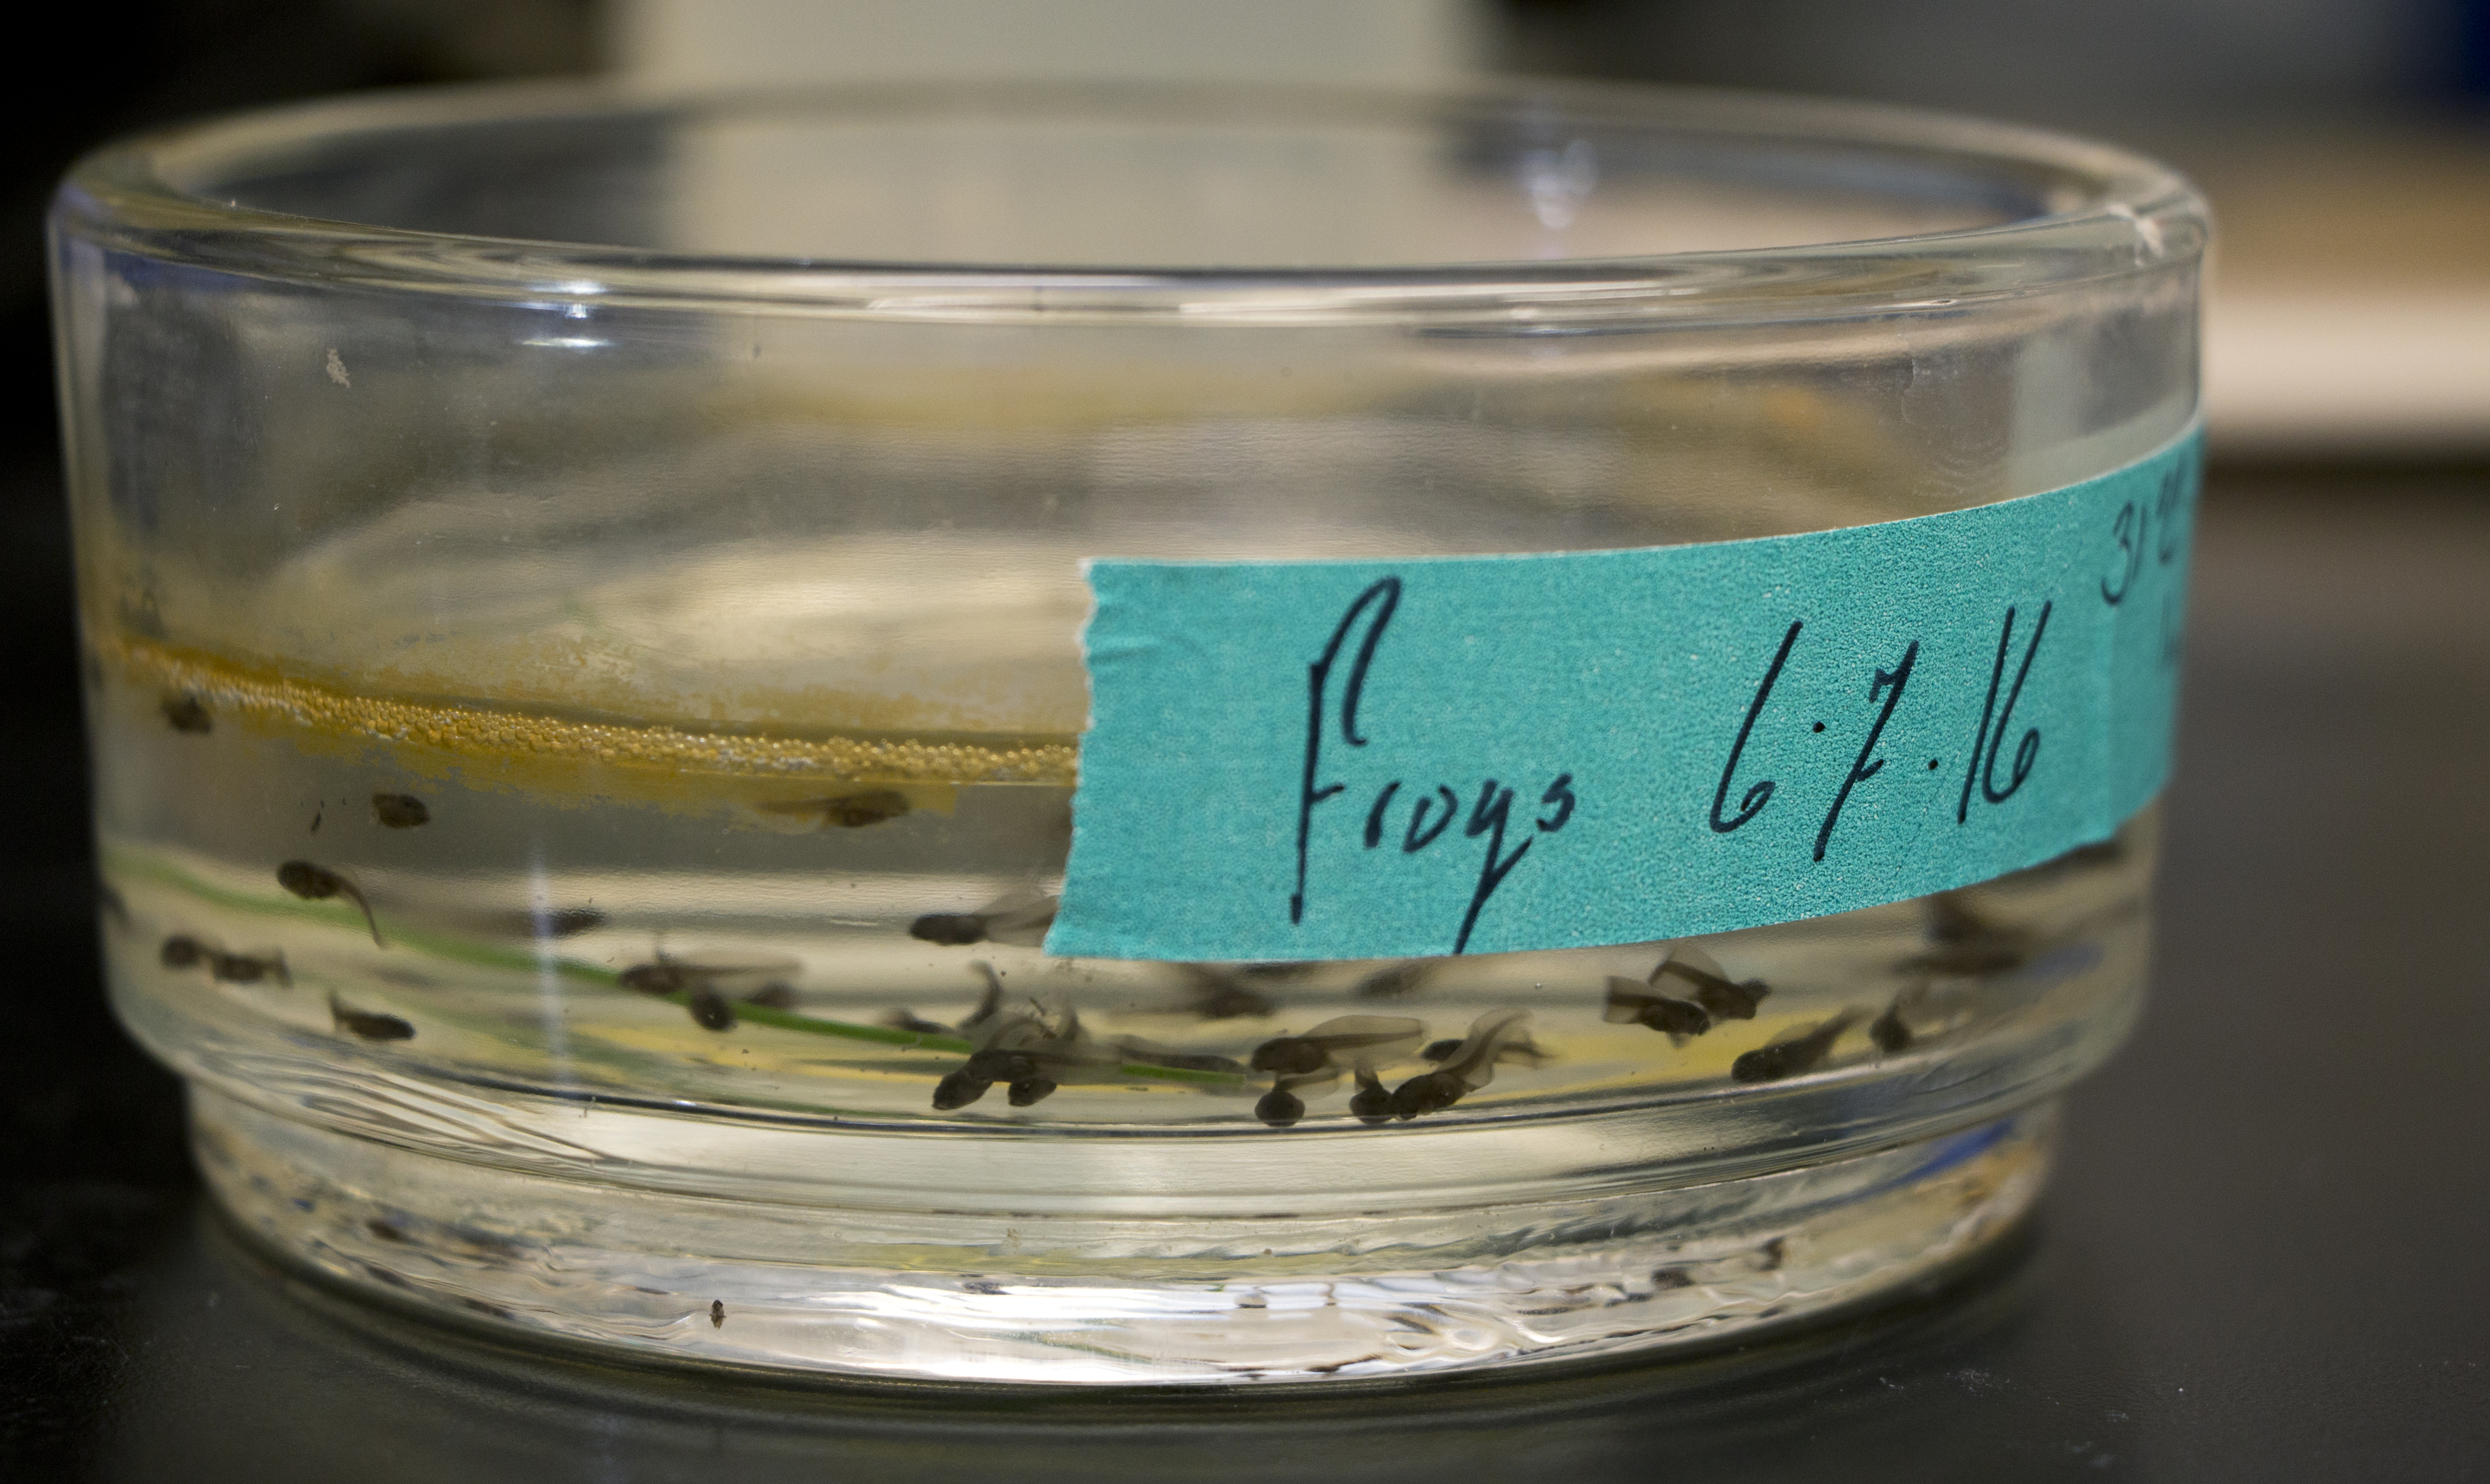 The Seaver lab raises frogs to study their development.